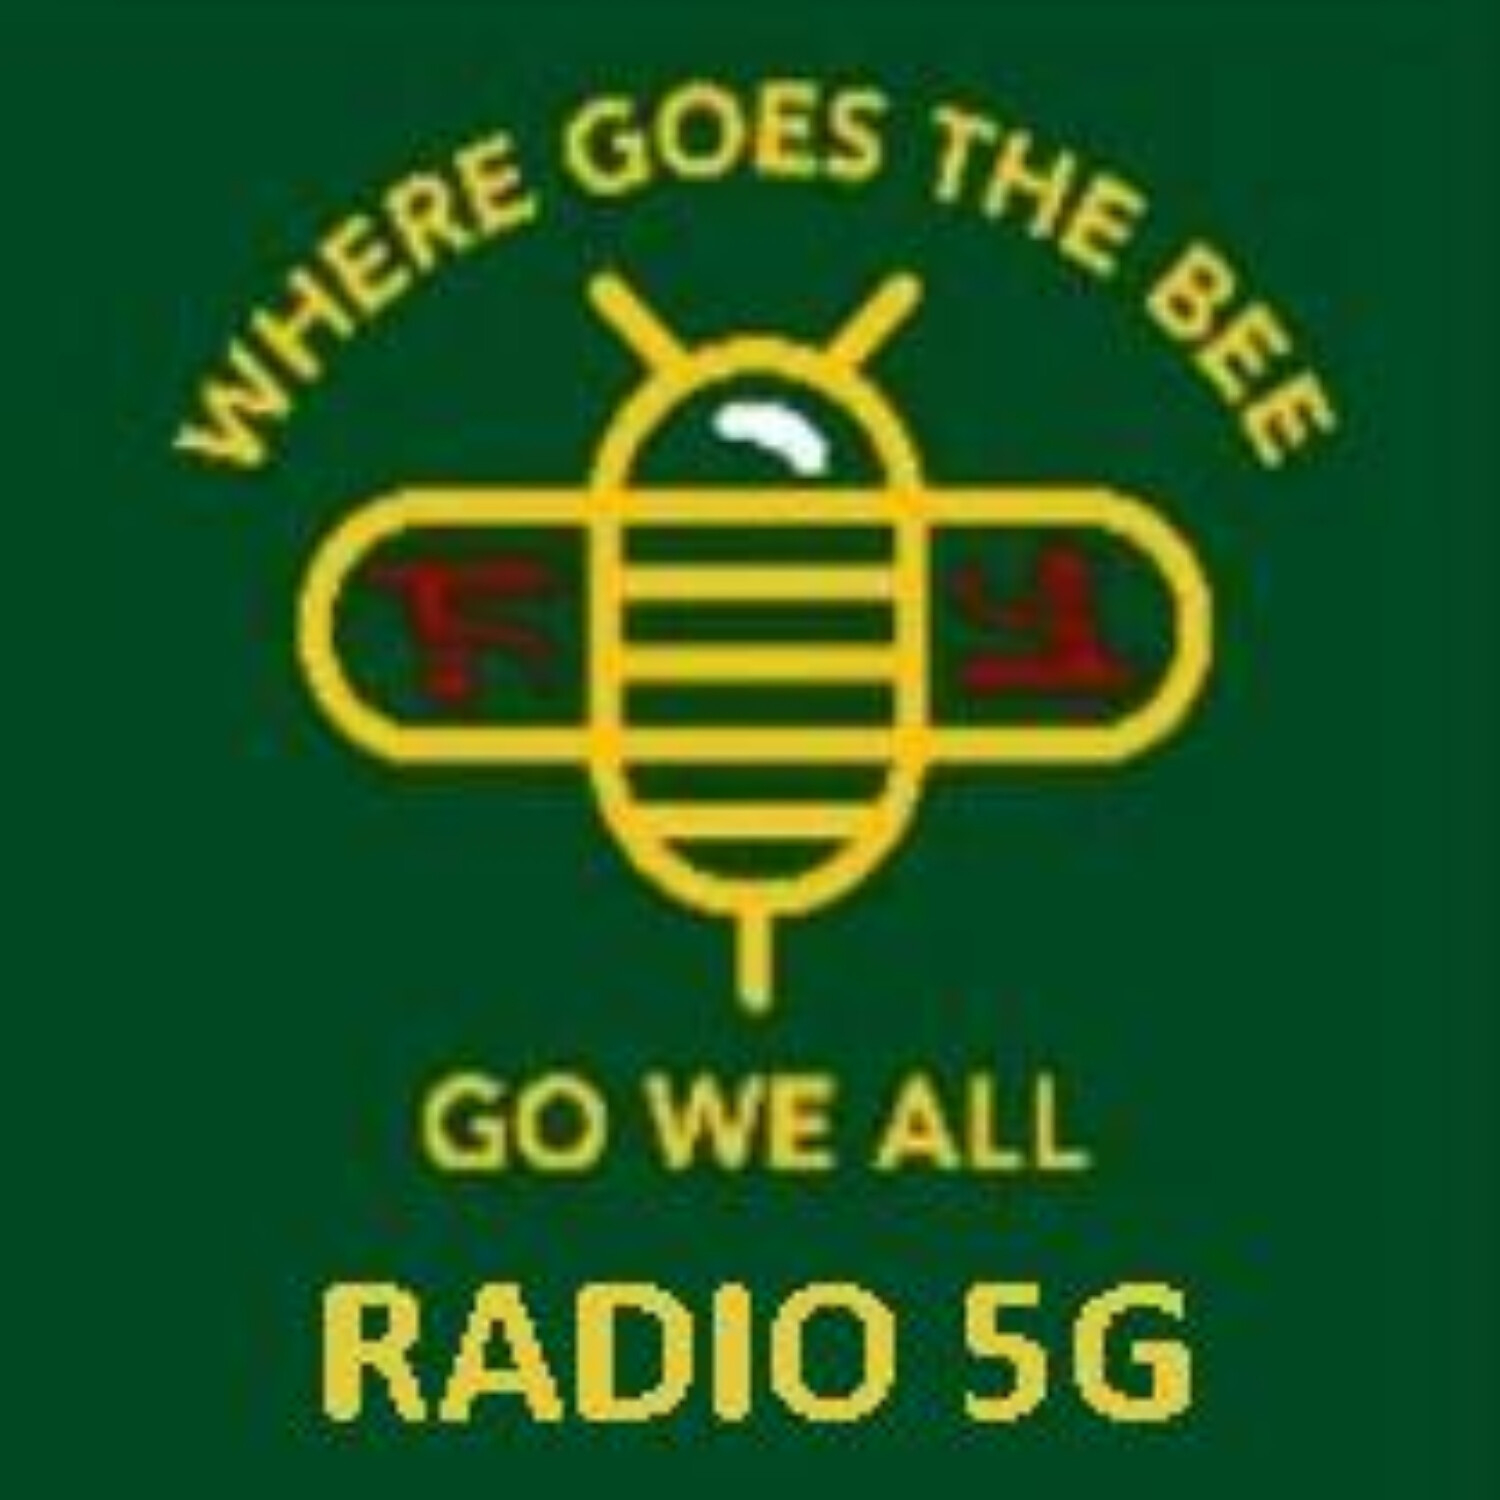 RADIO 5G 2/1/23 - Dr. Robert Duncan & Christopher Jordan on Hive Mind an